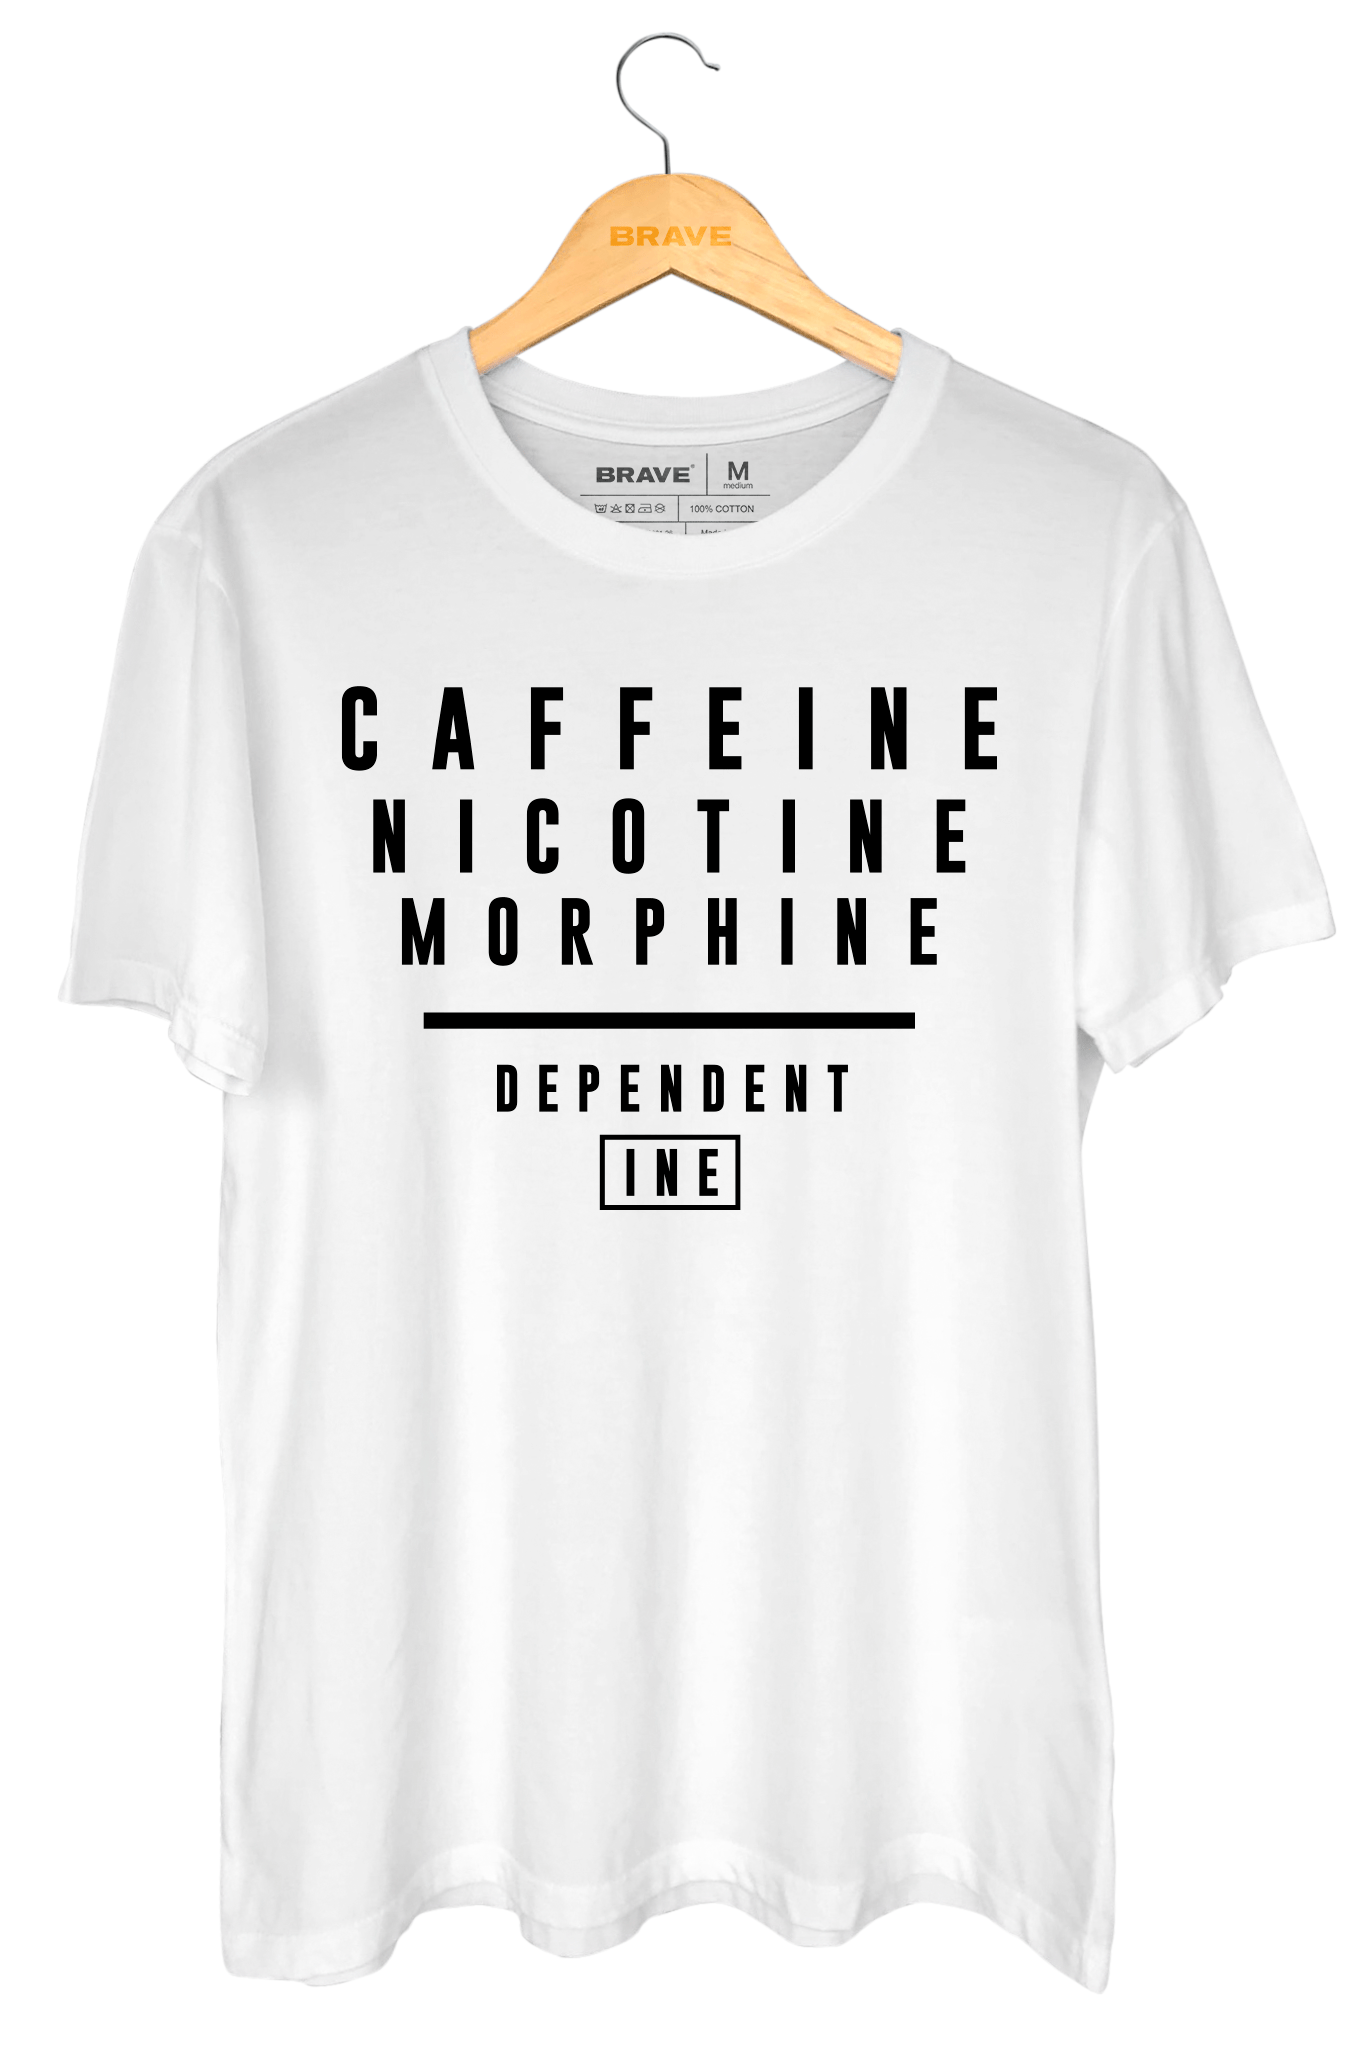 Camiseta Caffeine Dependent  - Gola Básica